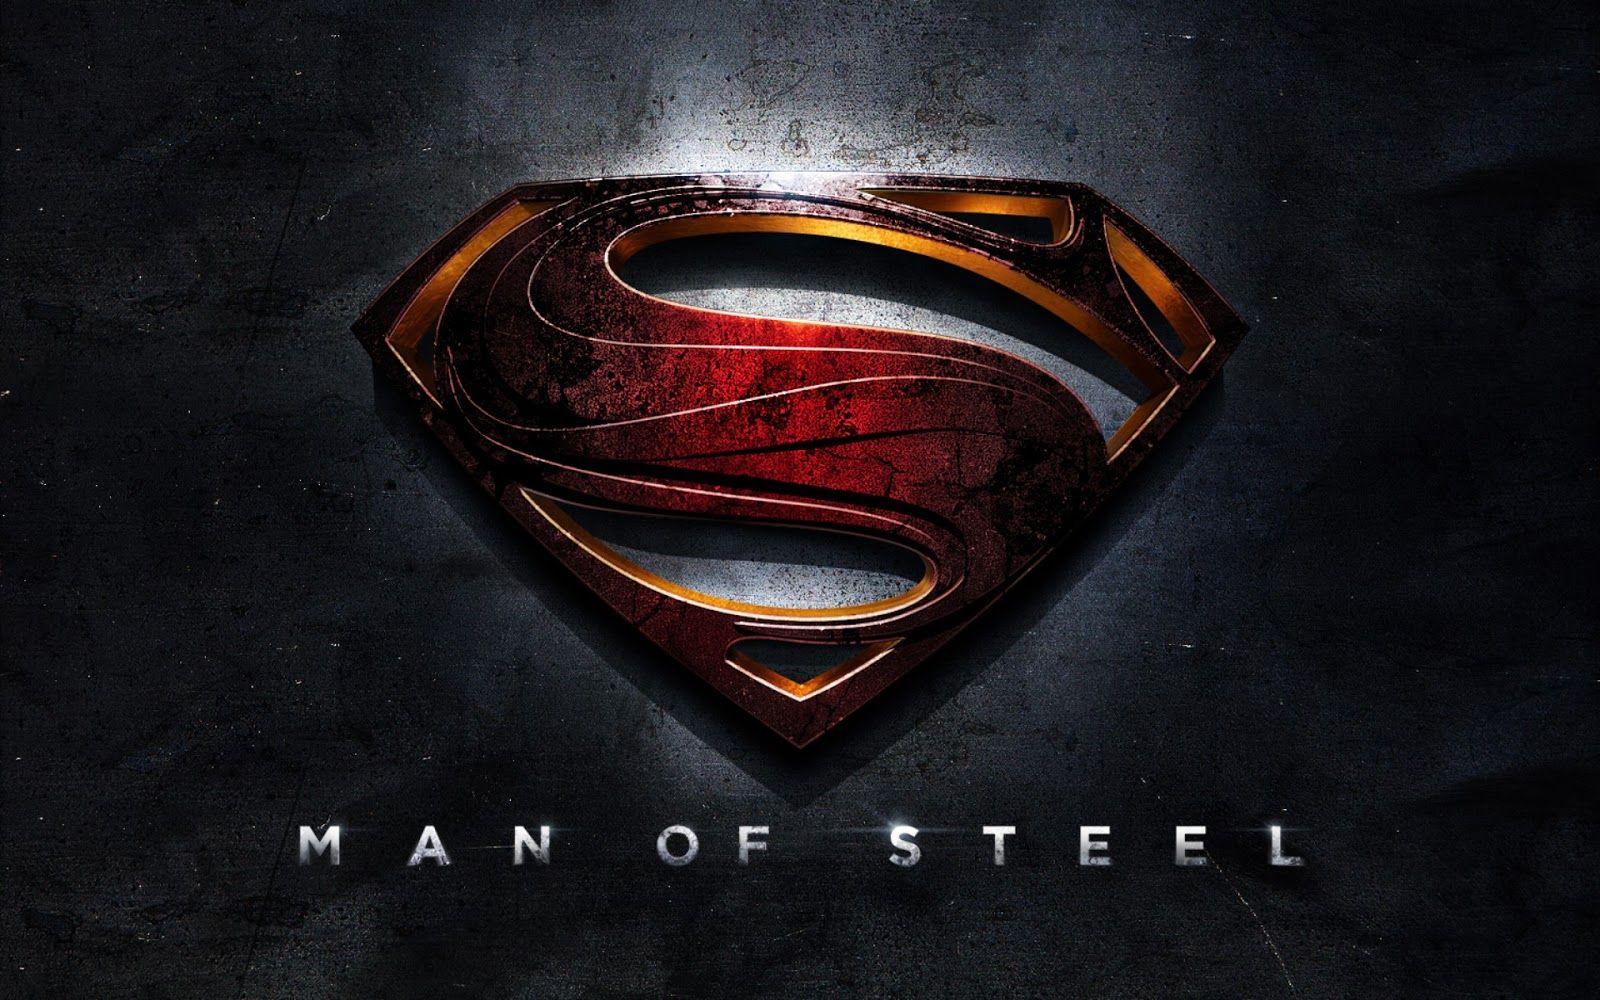 Man of Steel J Logo - James J. Caterino : 'Man of Steel' saved